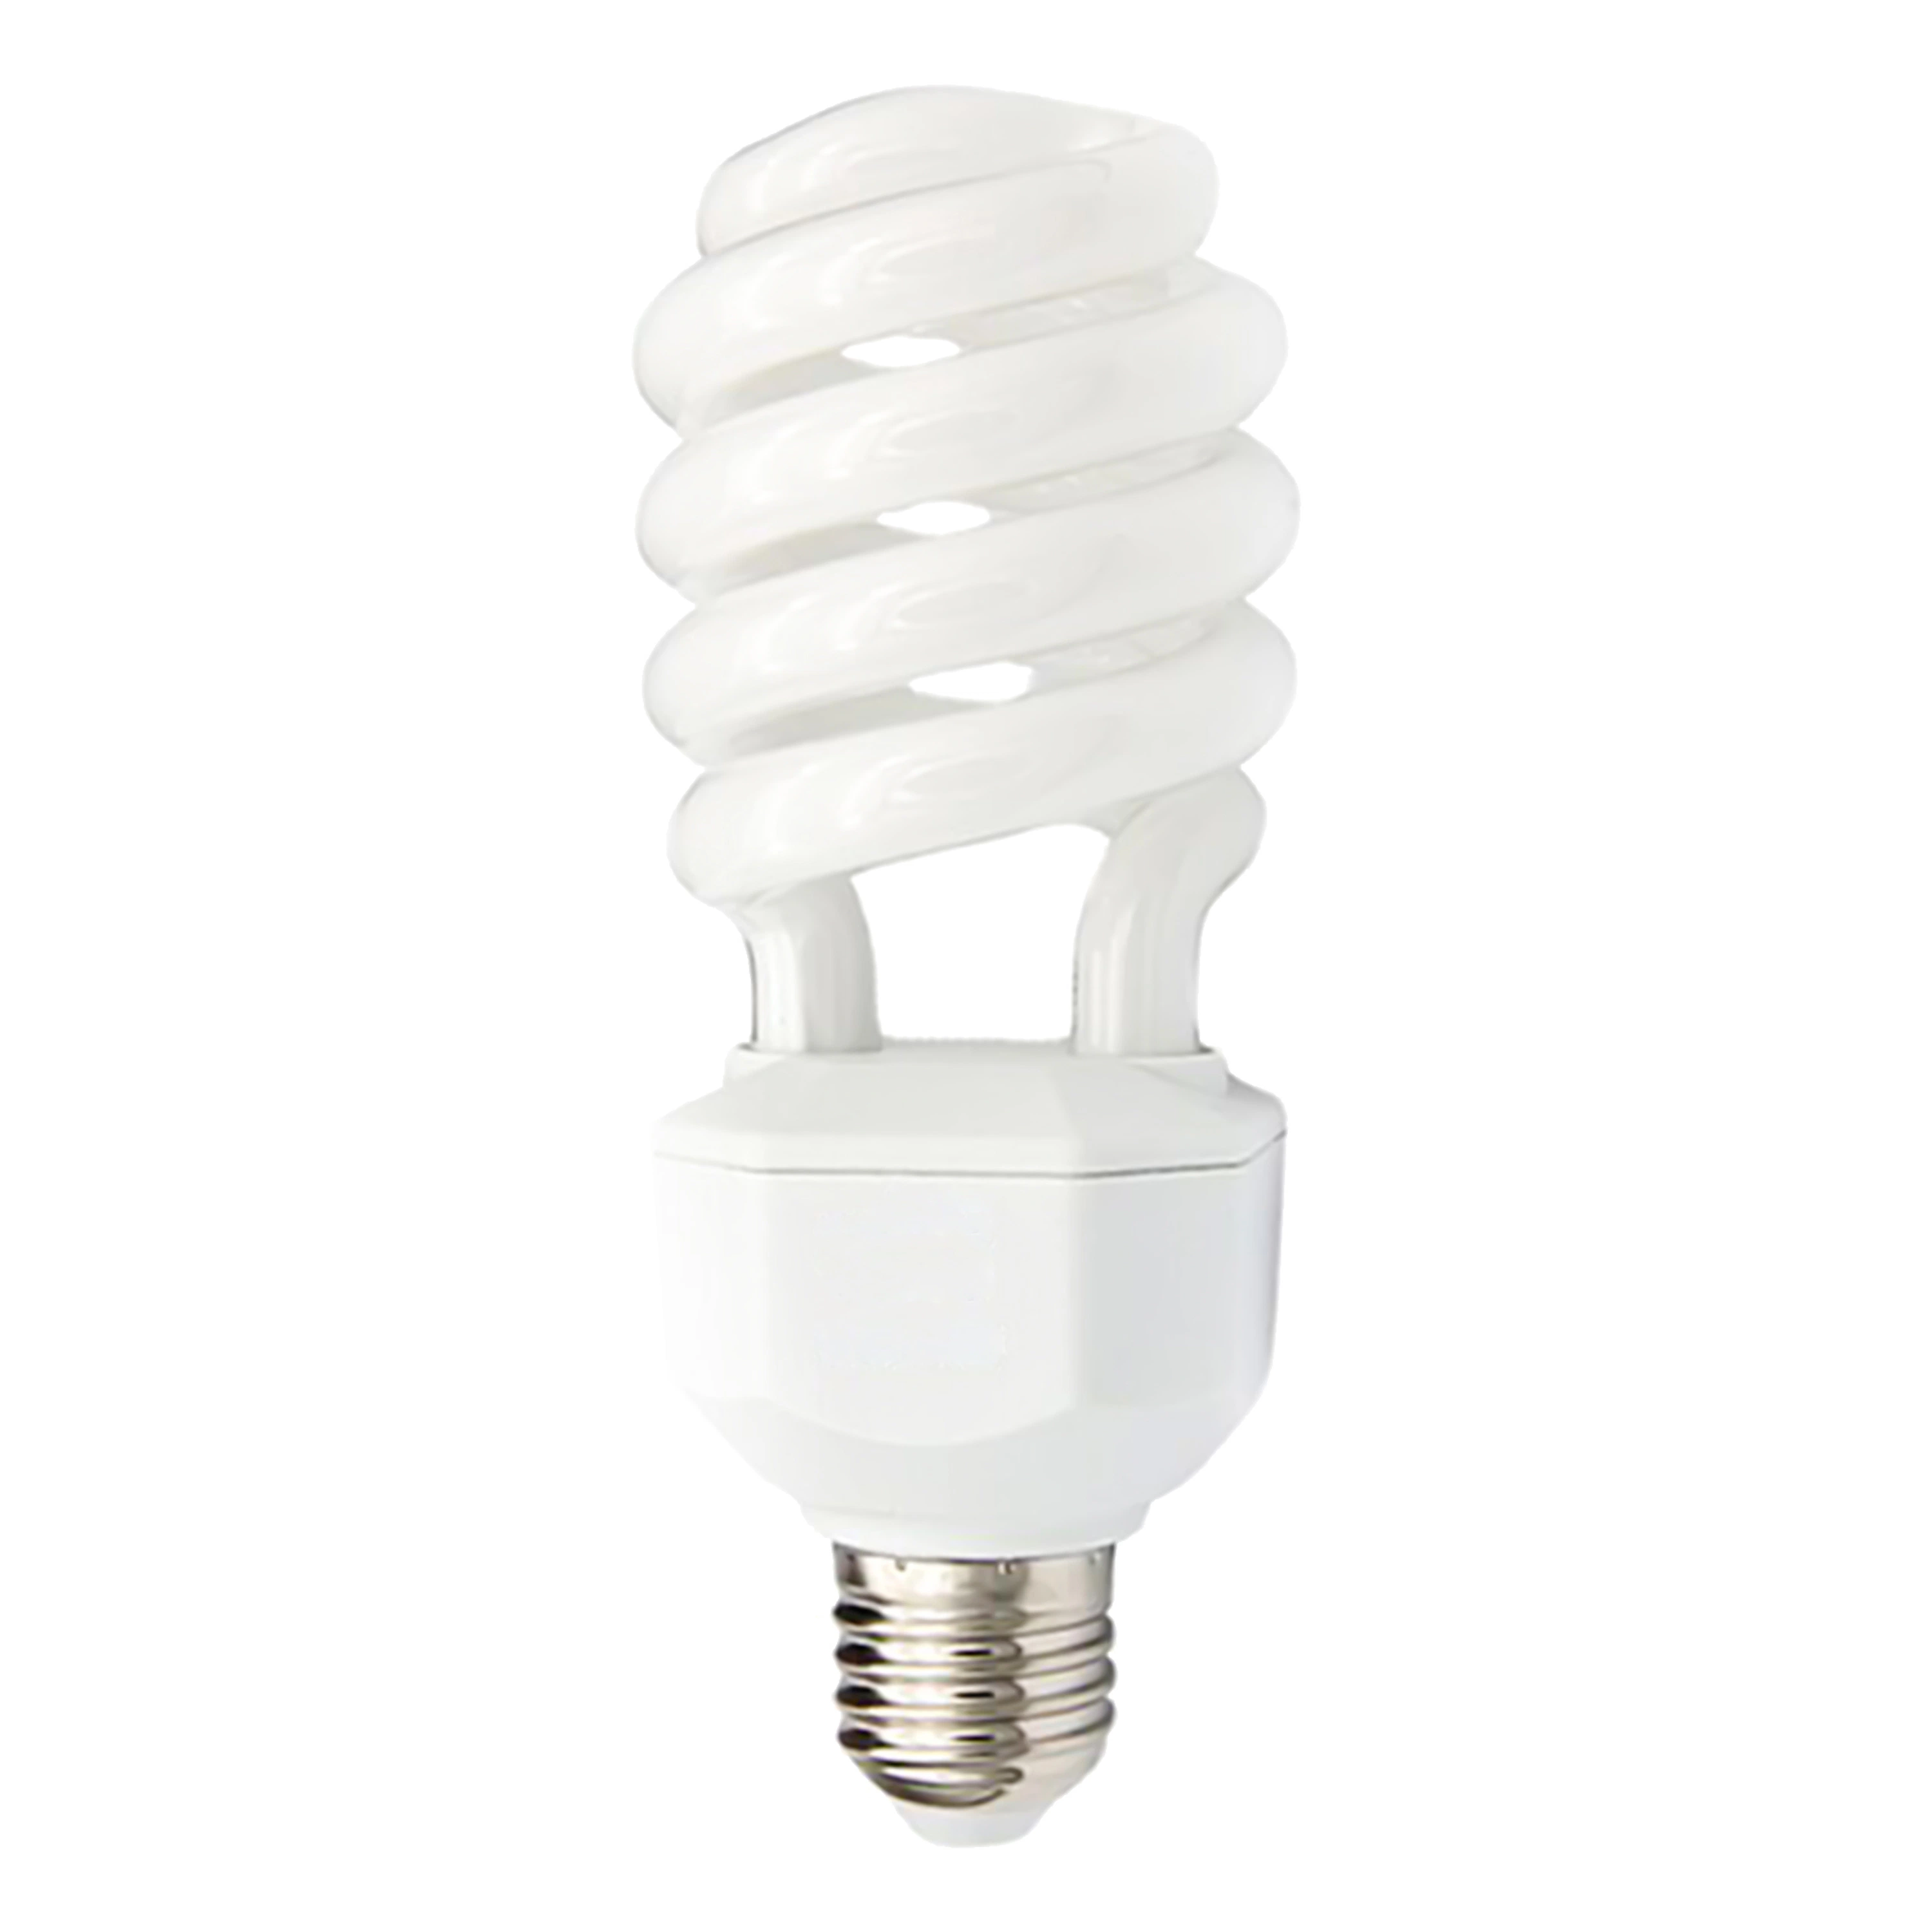 Leuchtstofflampe Energiesparend E27/E26 Basis UVB-Lampe für Reptile Terrium